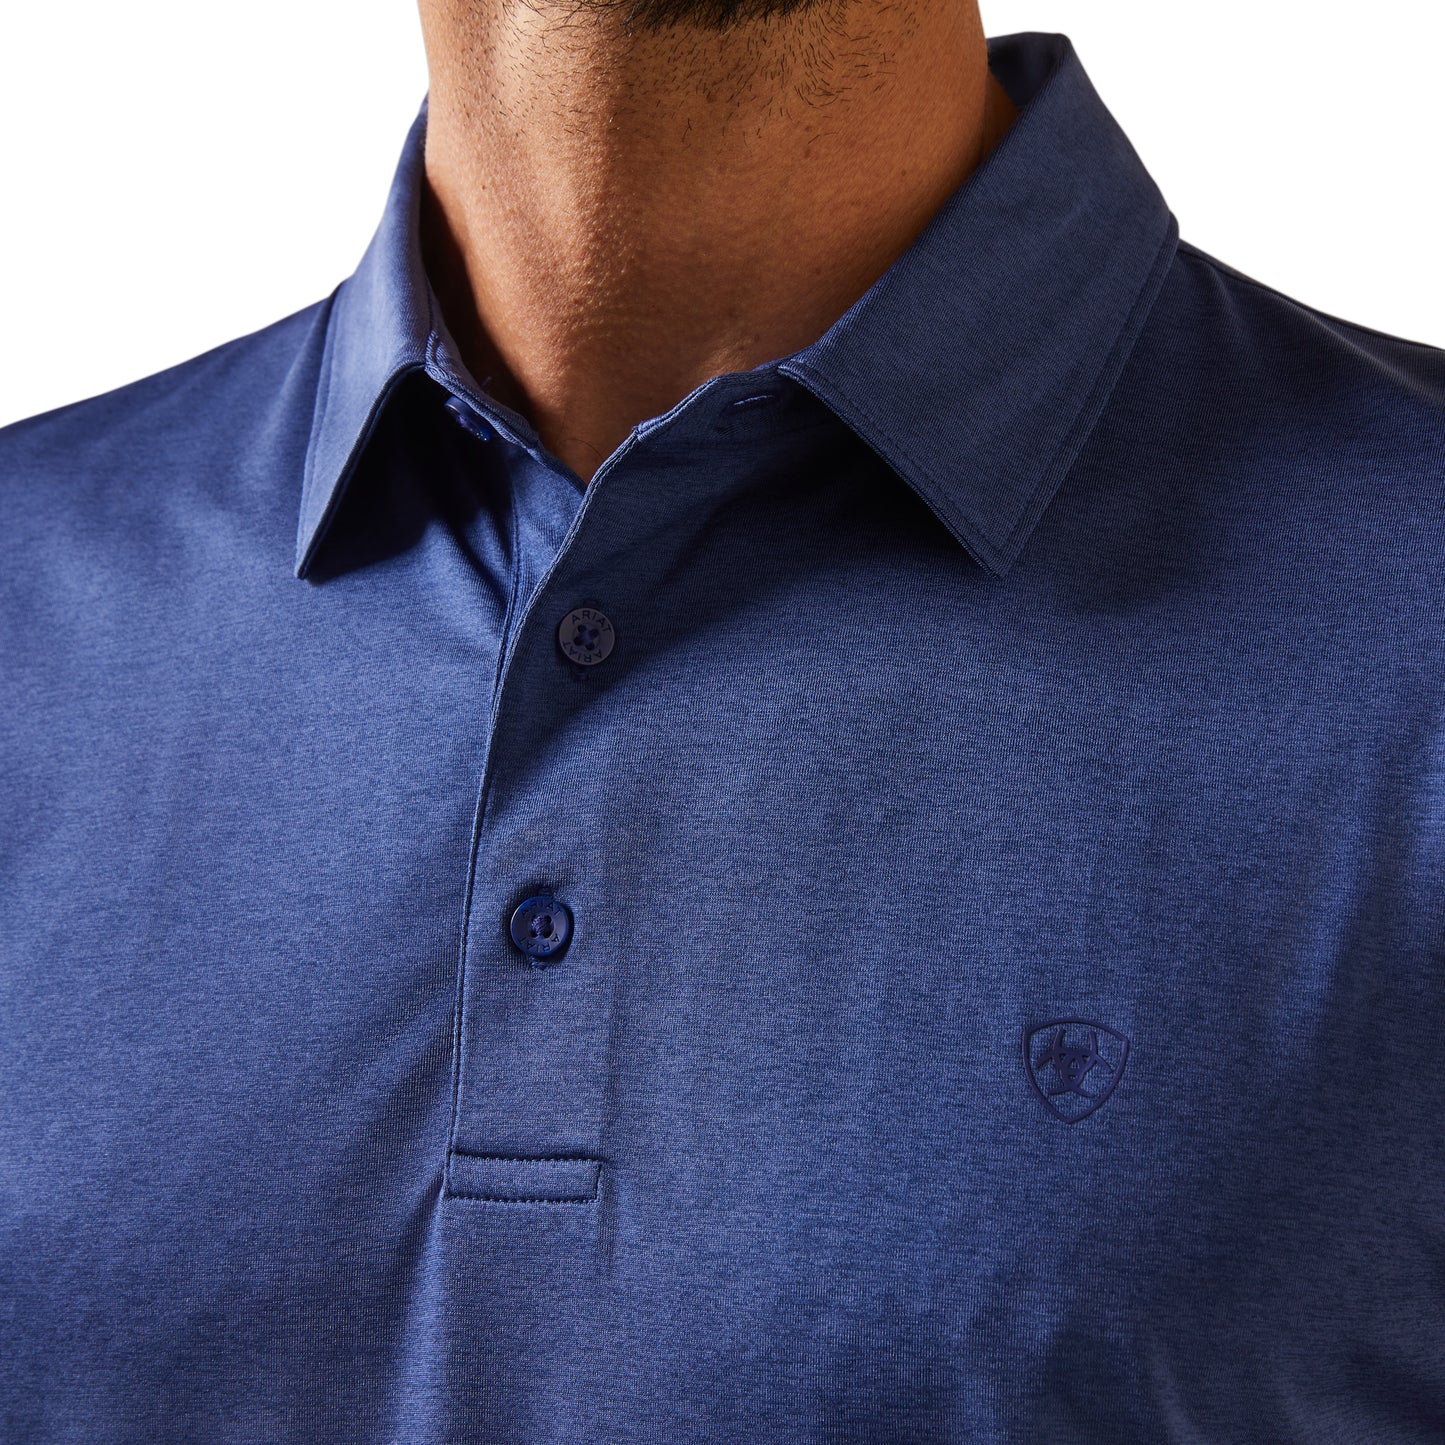 Ariat® Men's Charger 2.0 Cloudburst Blue Polo Shirt 10043572